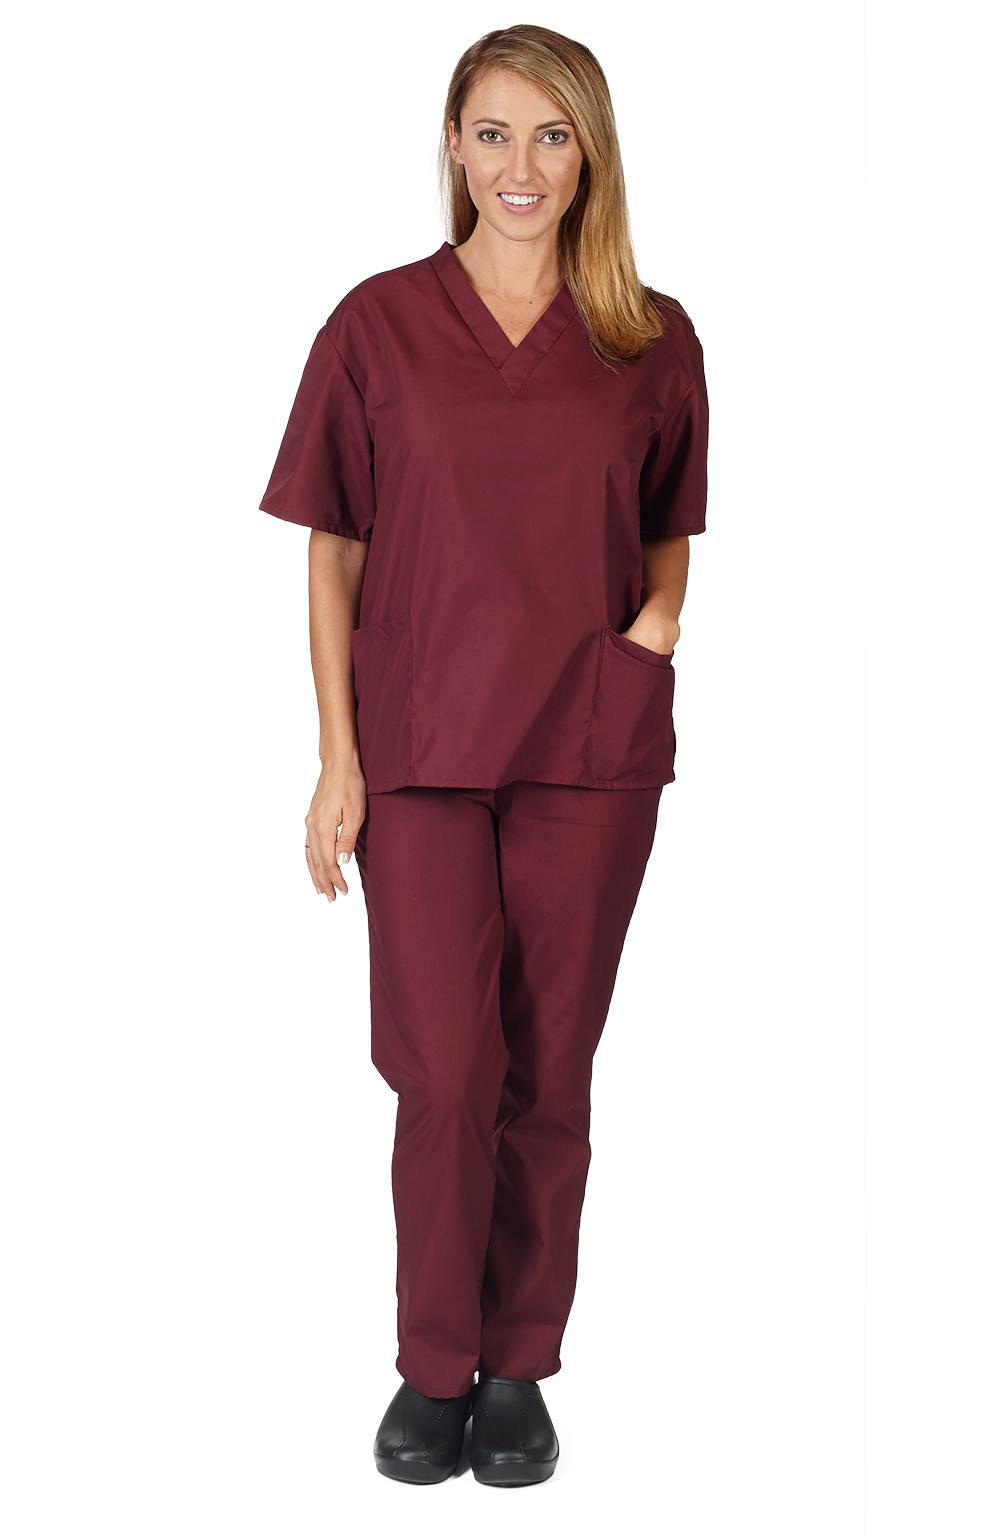 Unisex Men/Women Natural Uniforms Medical Hospital Nursing Scrub V-Neck Top 